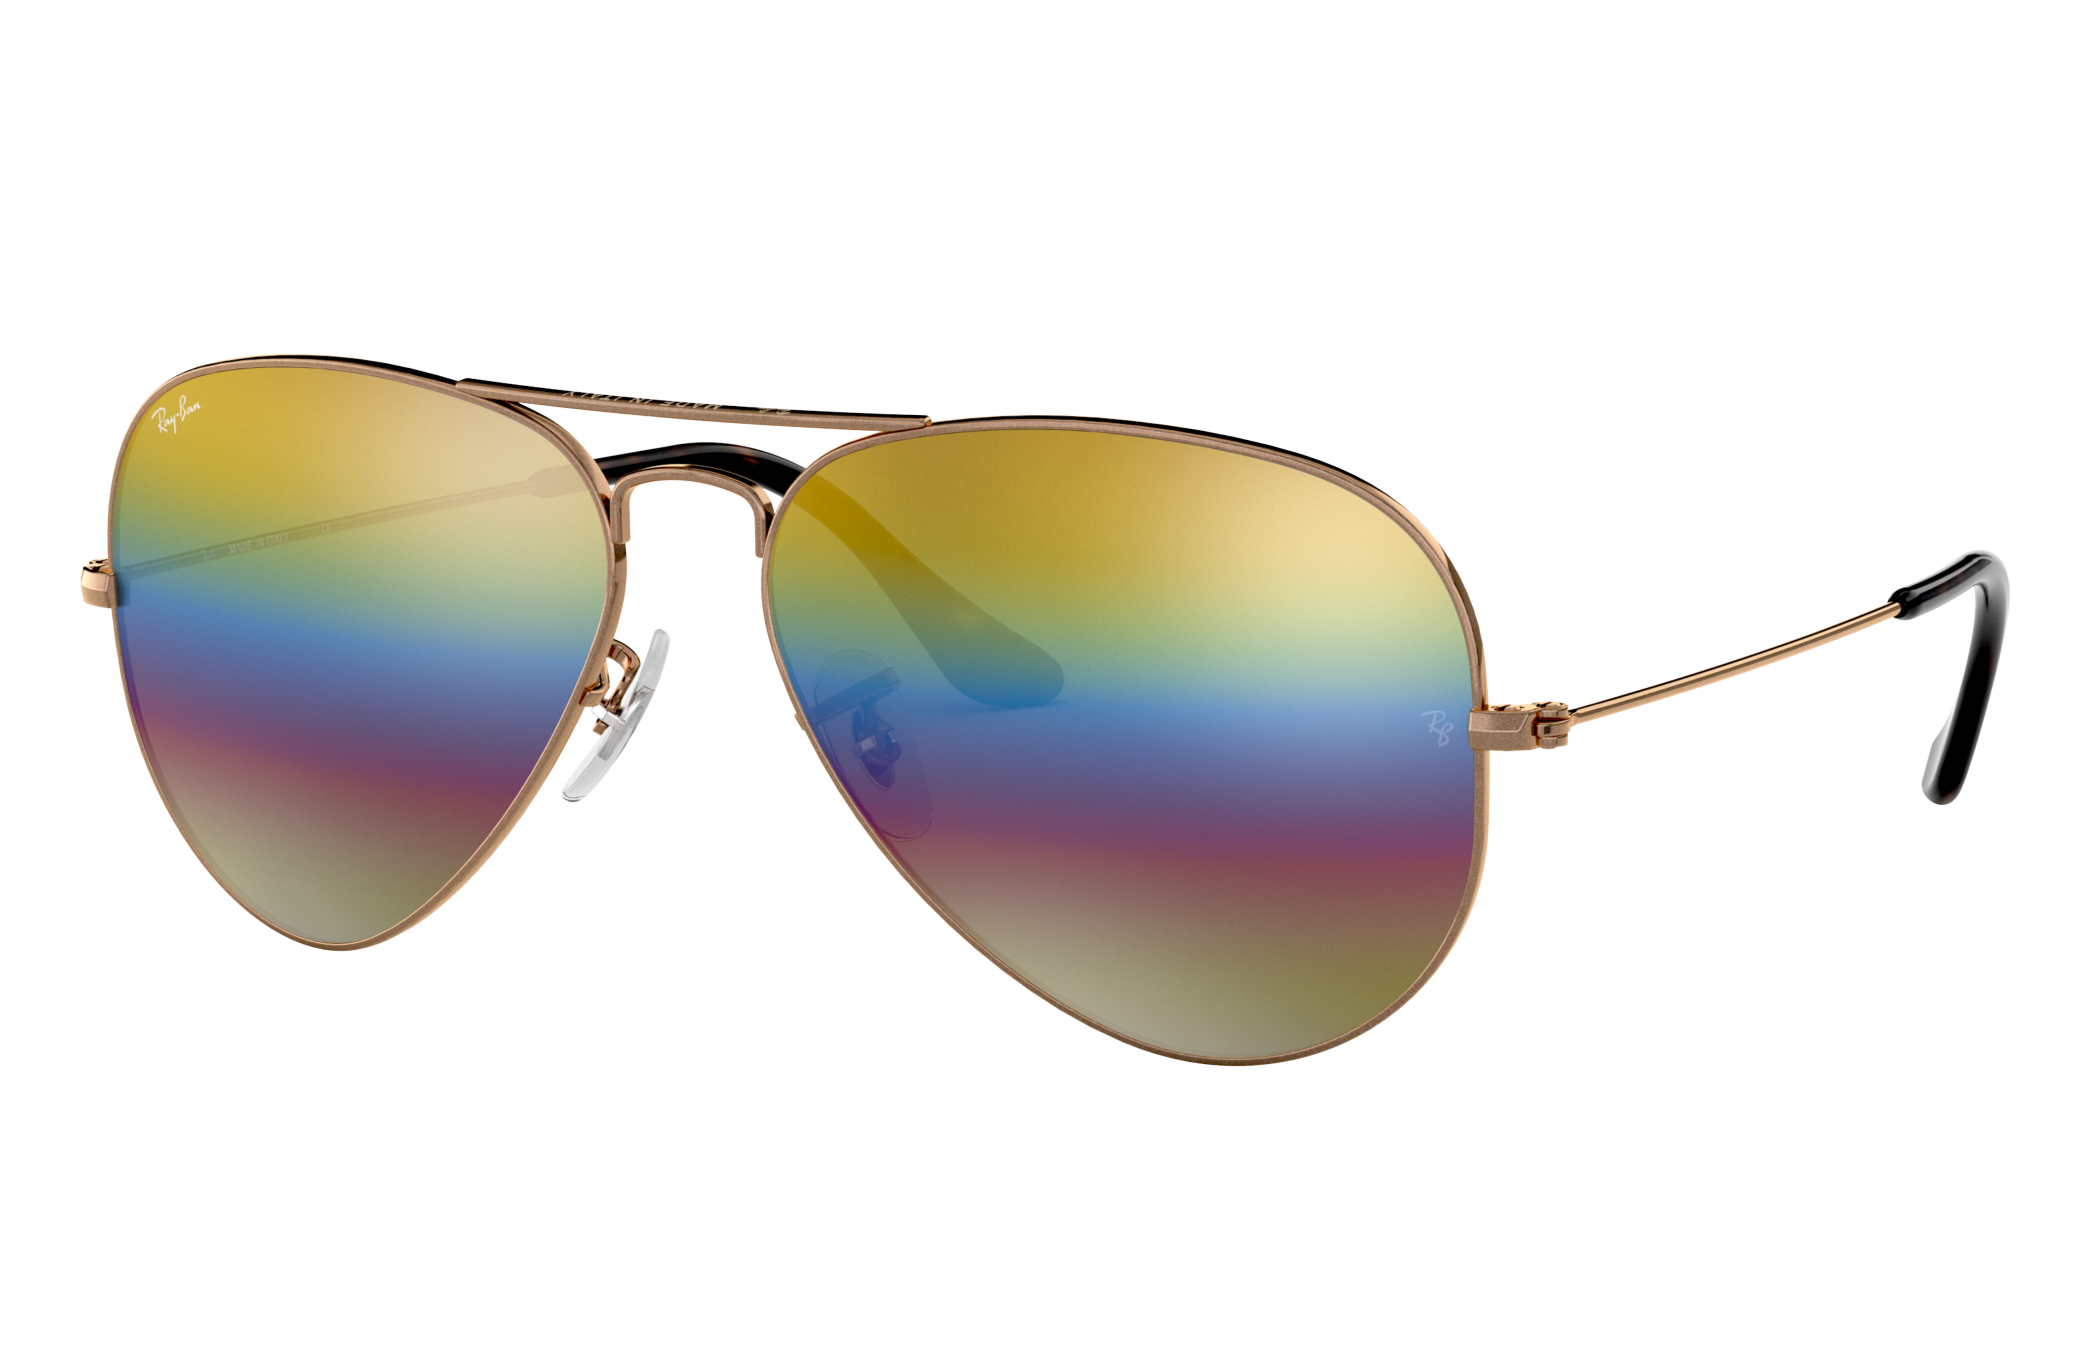 rainbow wayfarer sunglasses